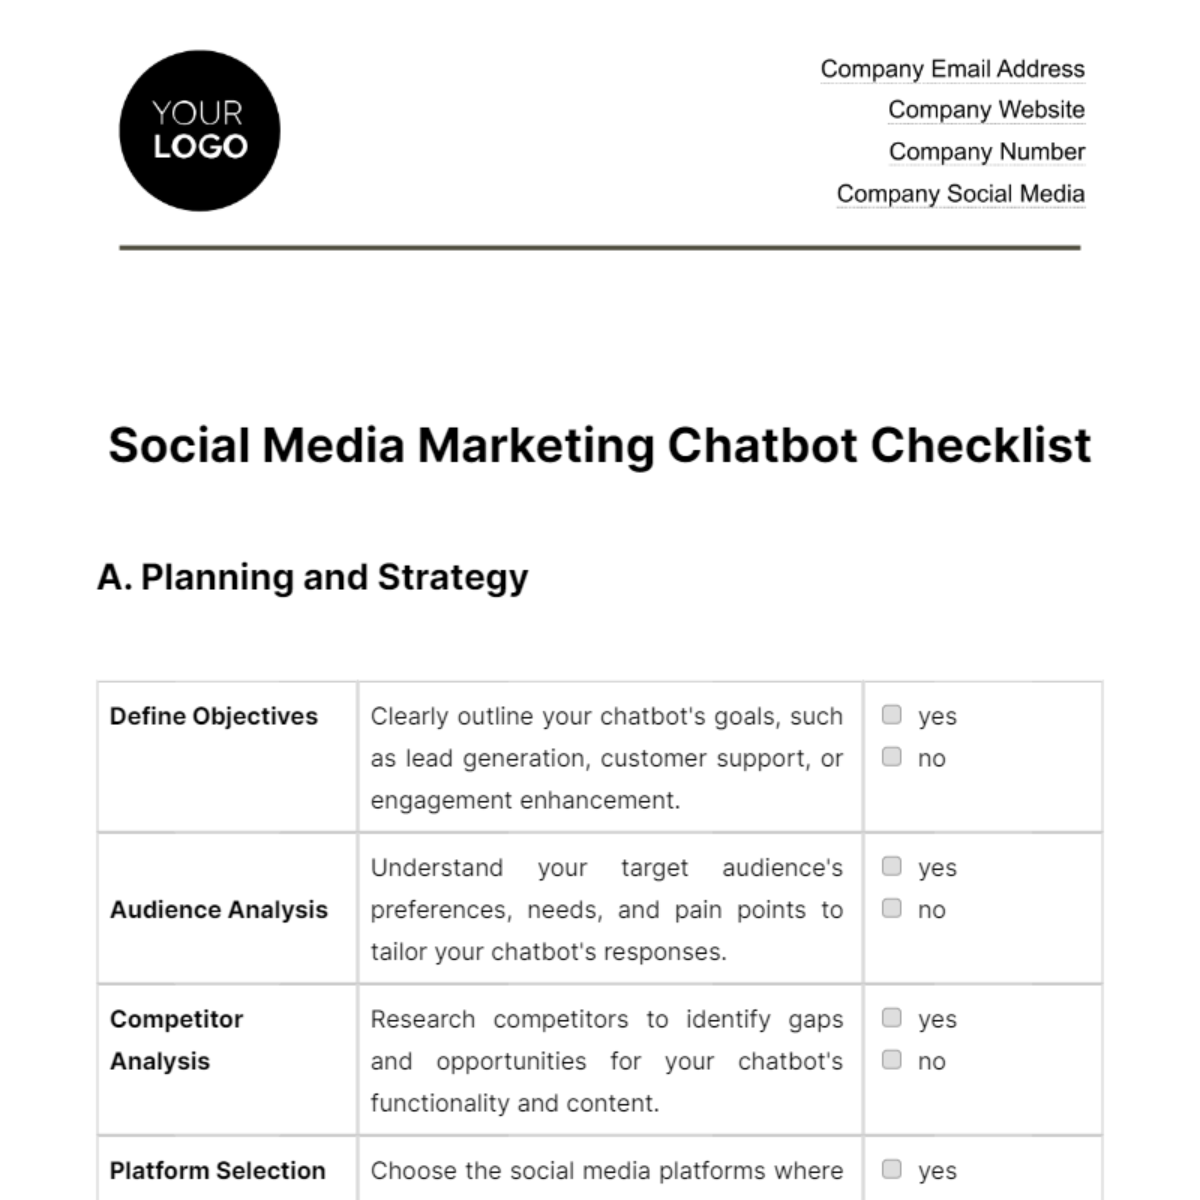 Social Media Marketing Chatbot Checklist Template